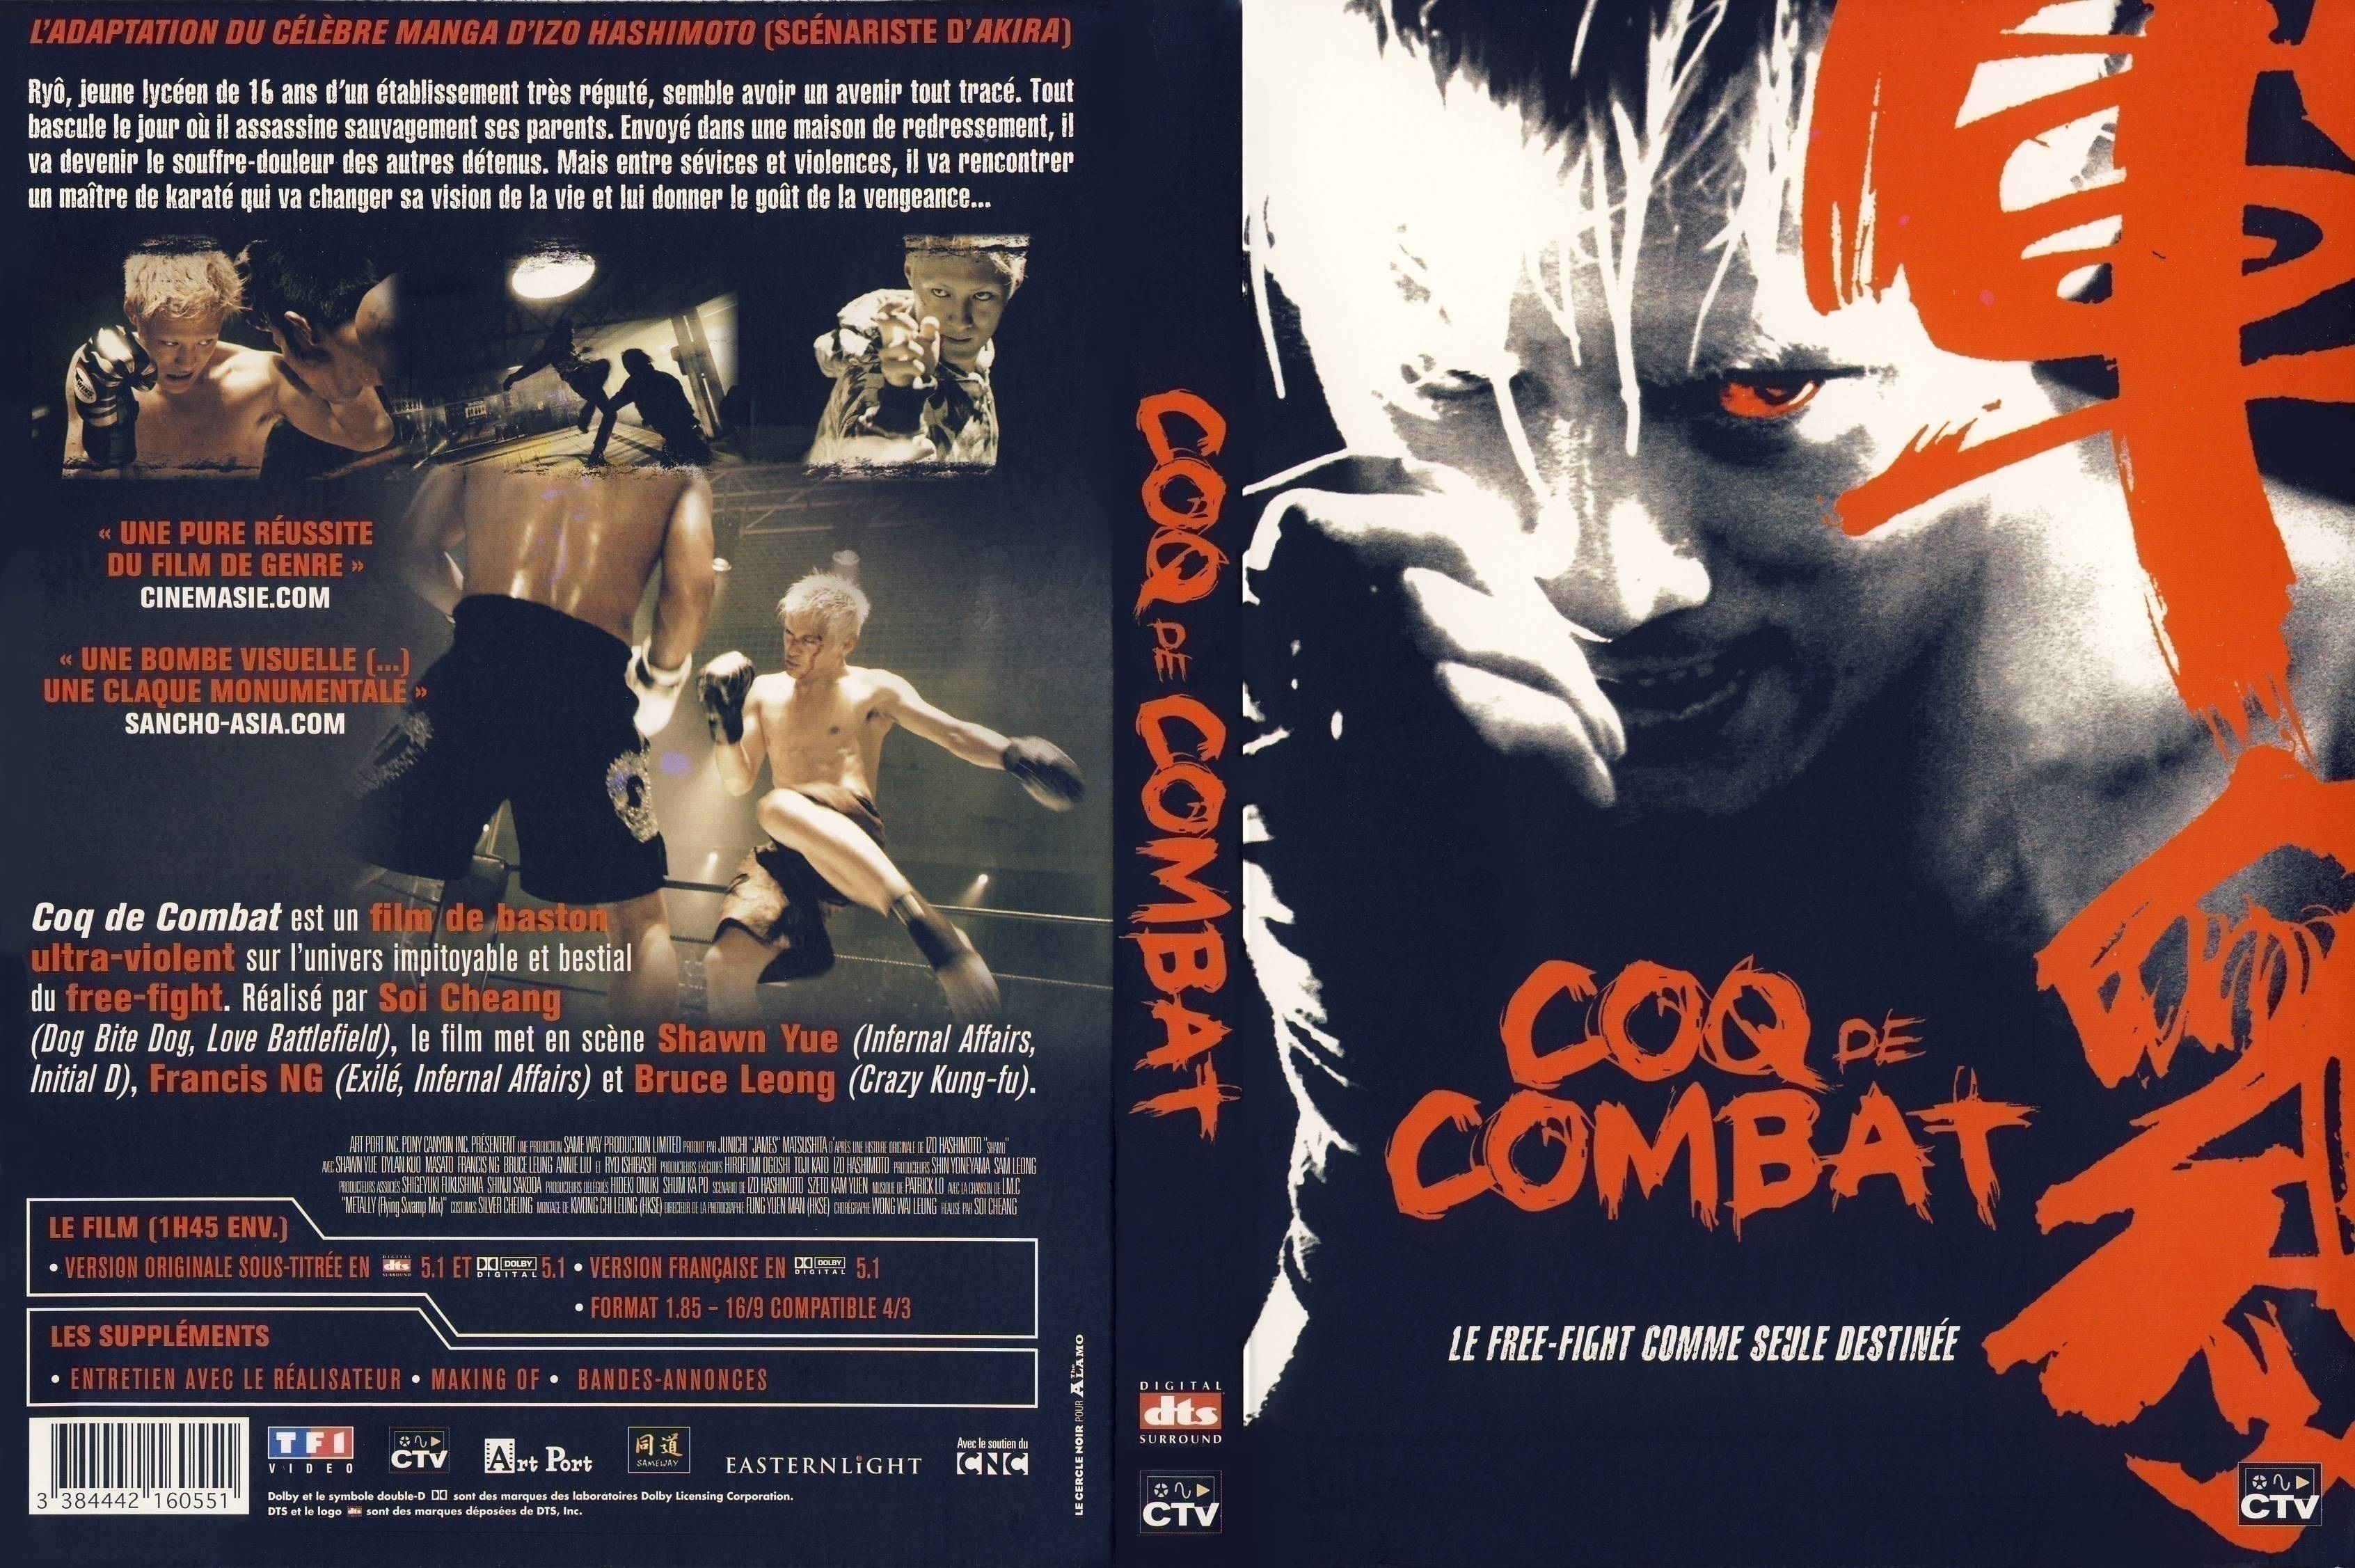 Jaquette DVD Coq de Combat